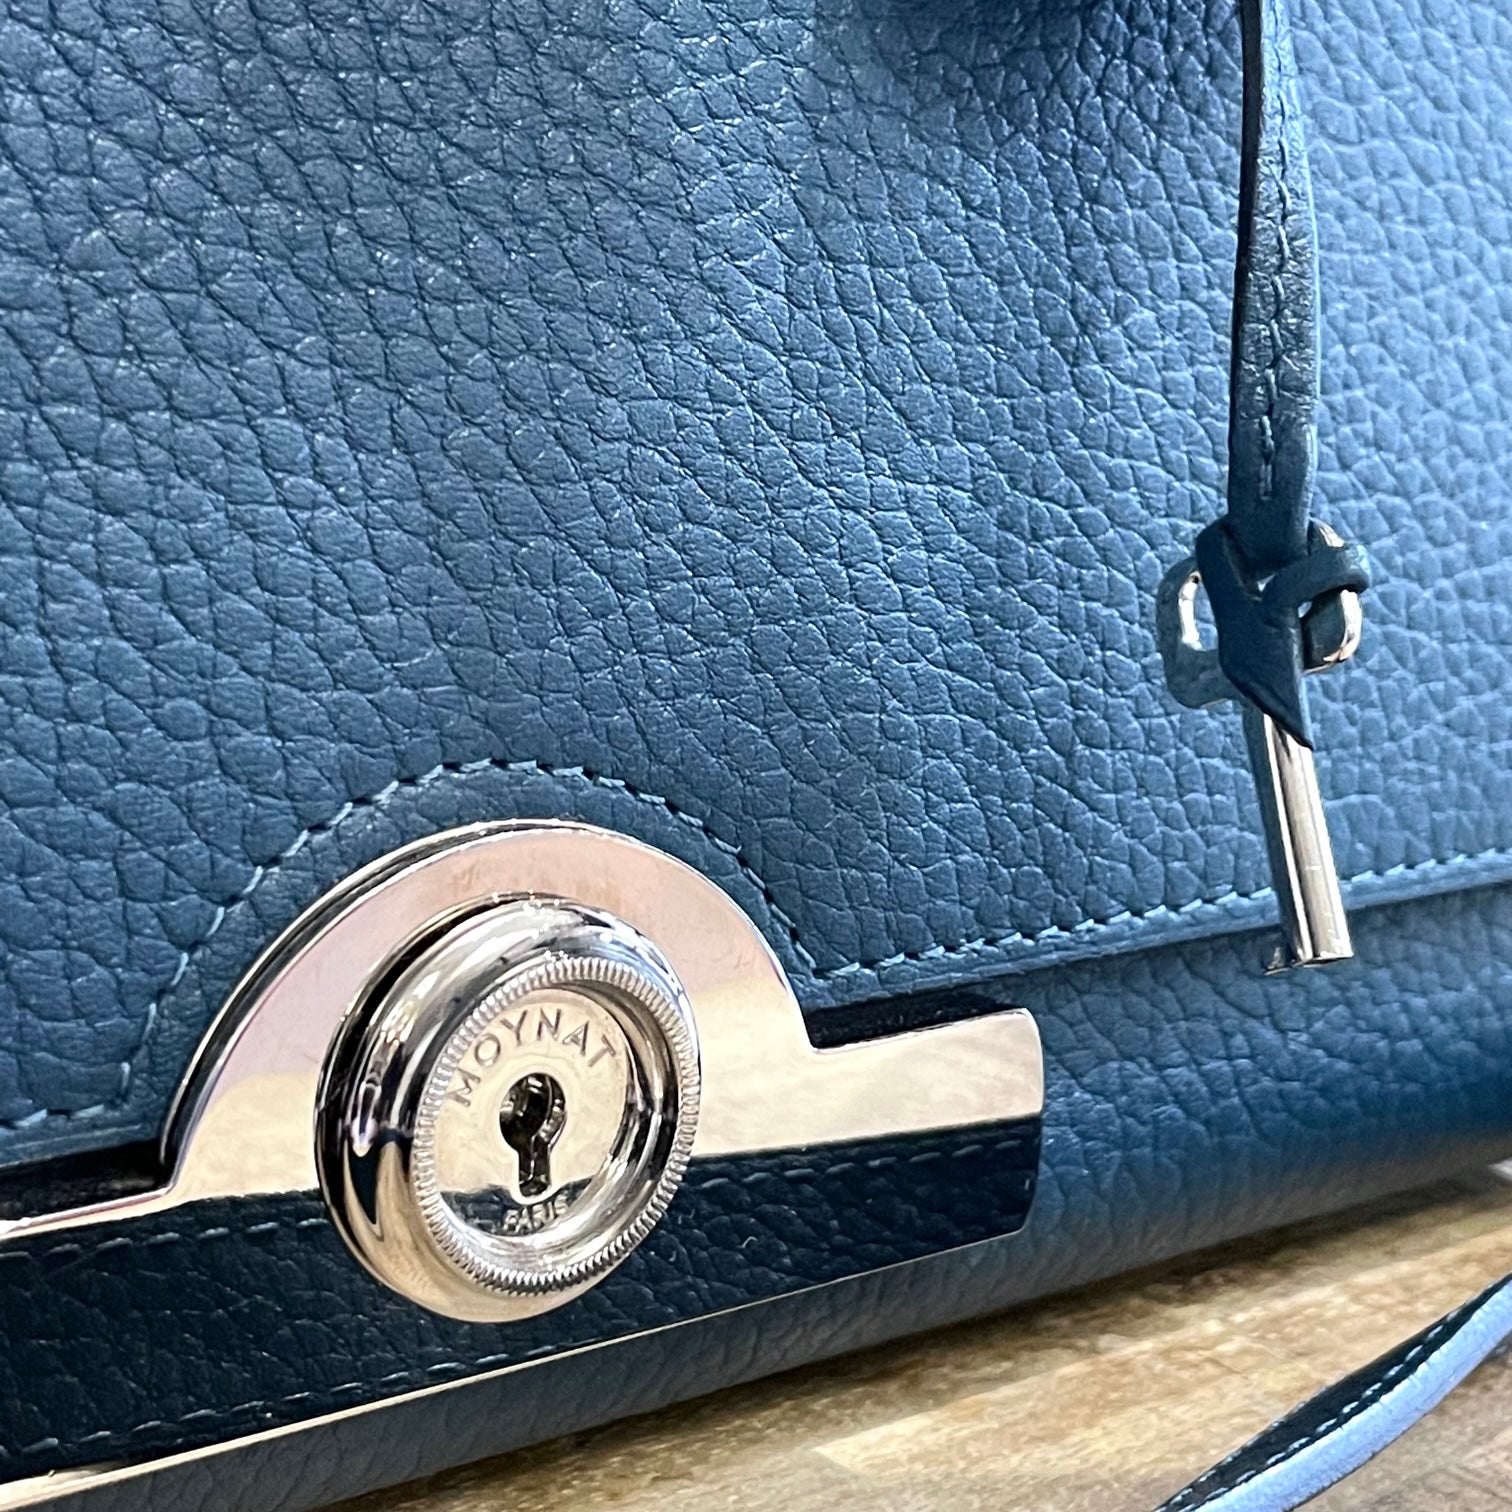 Moynat Réjane Nano Bag in Blue